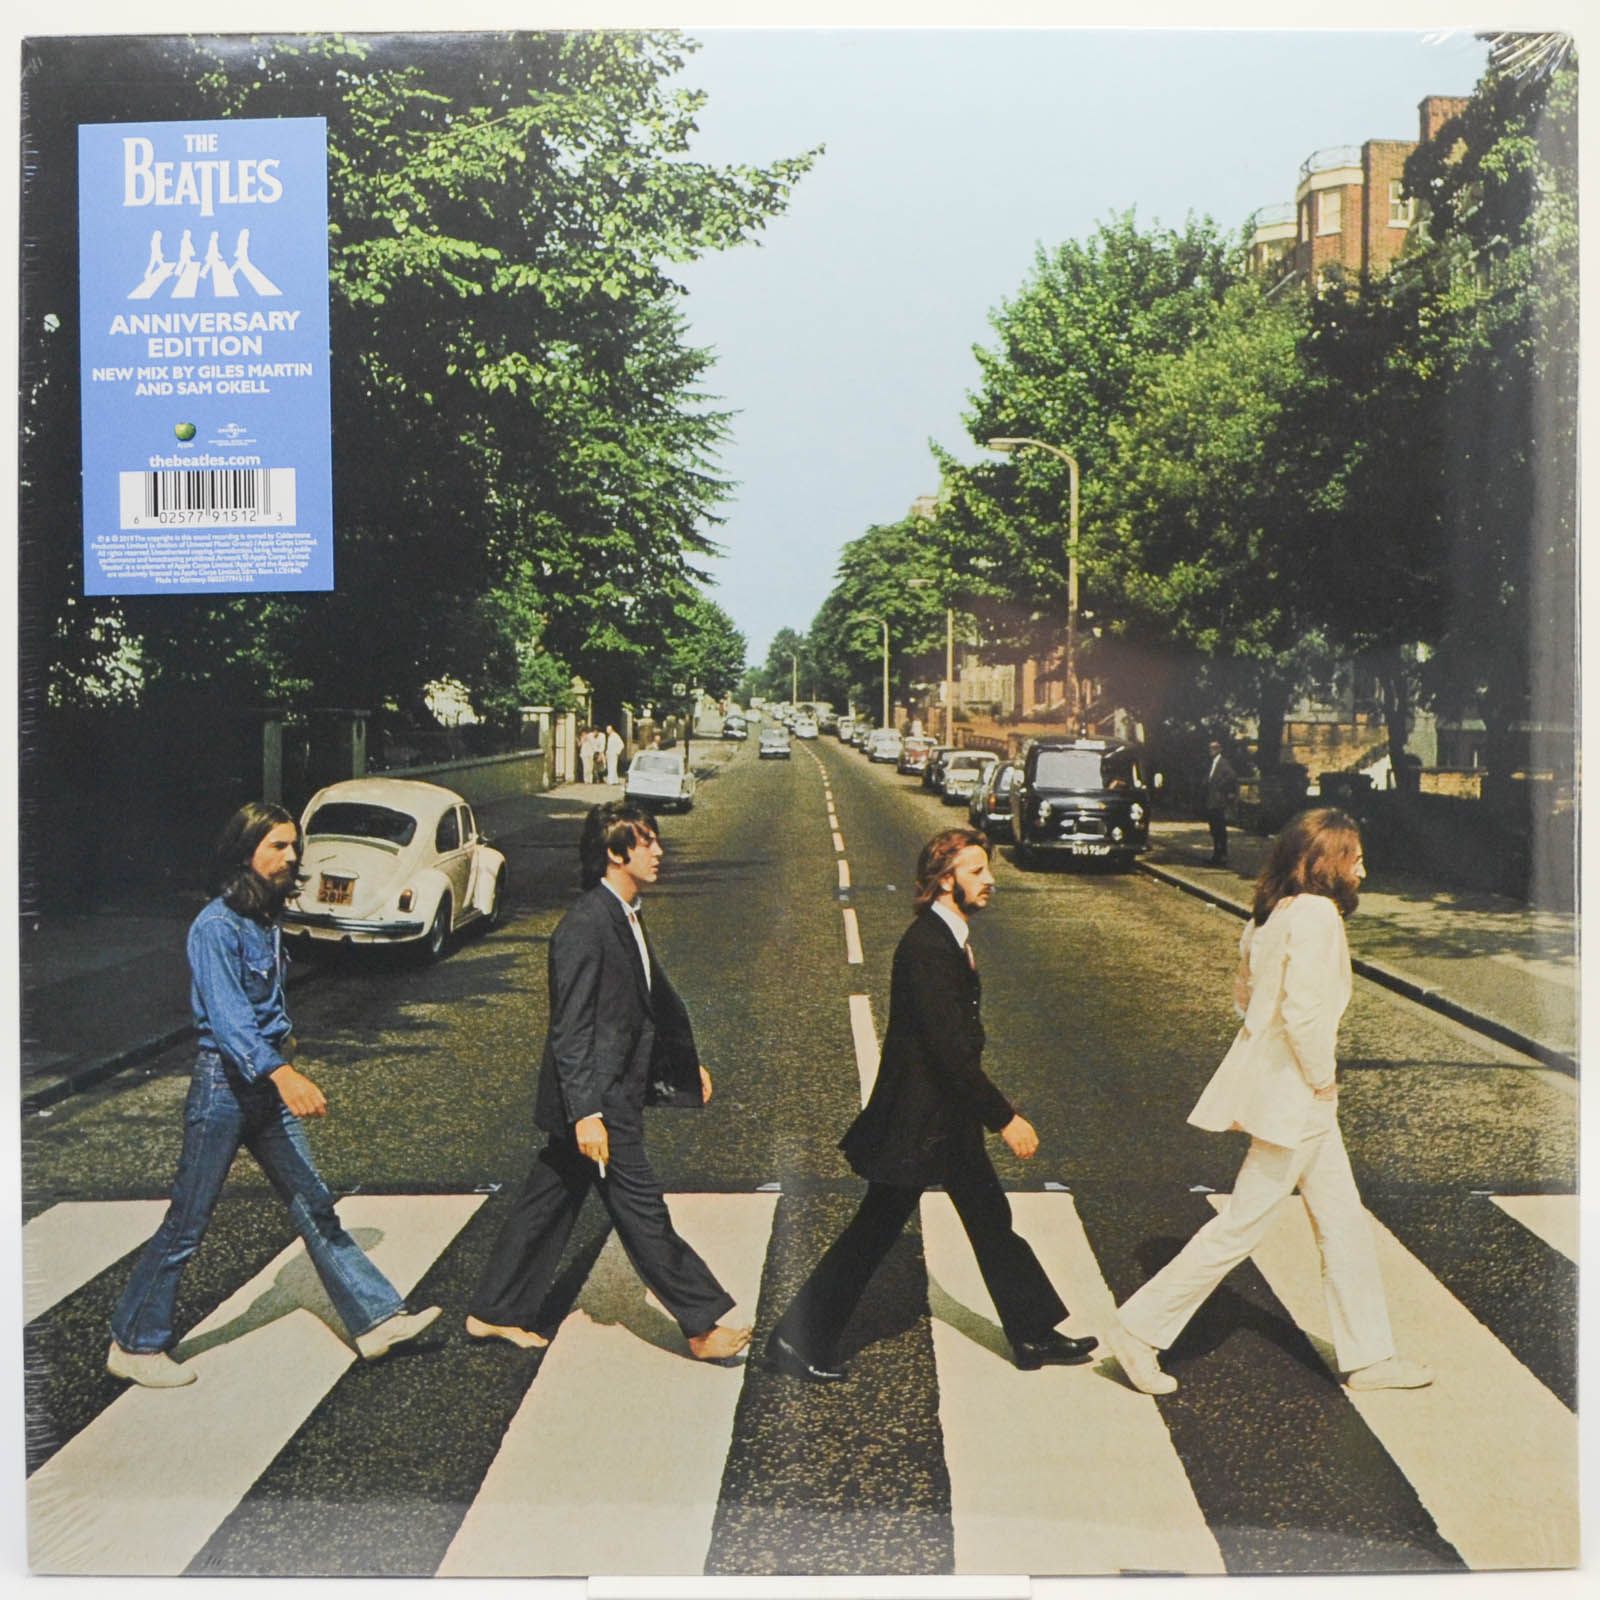 Beatles — Abbey Road, 1969